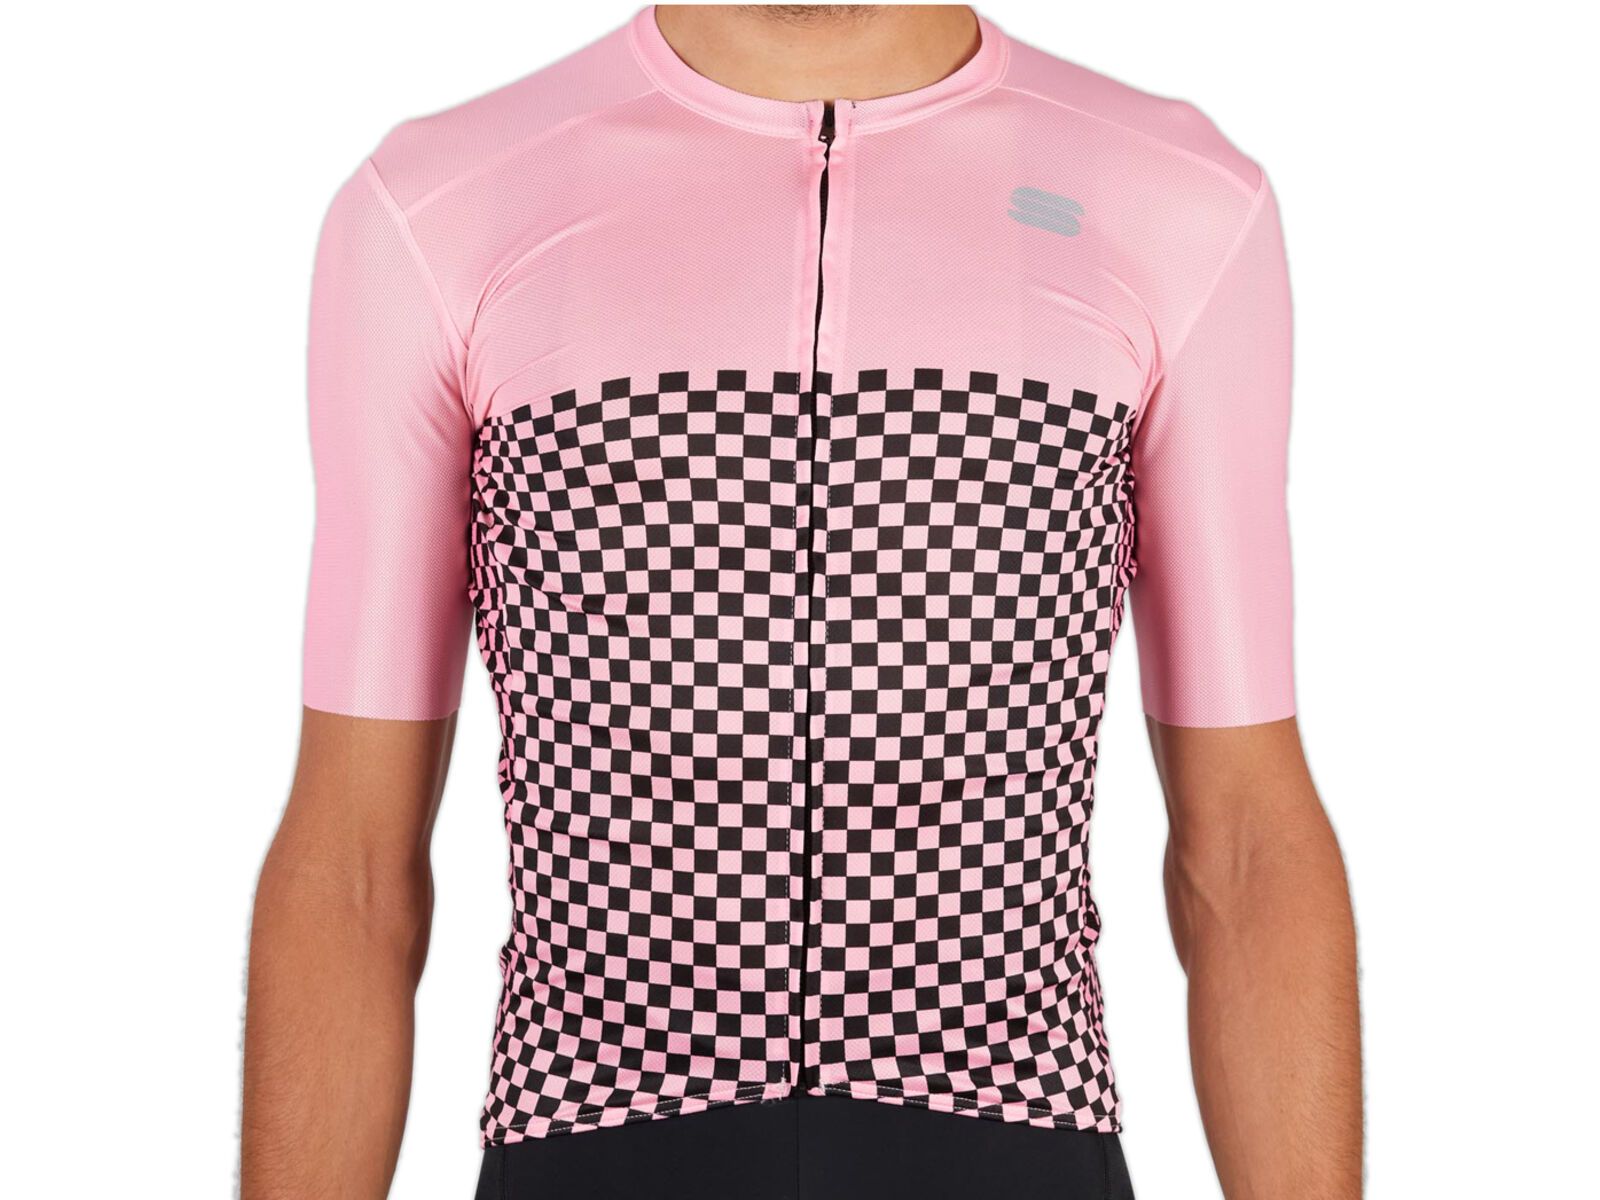 Sportful Checkmate Jersey, pink | Bild 1